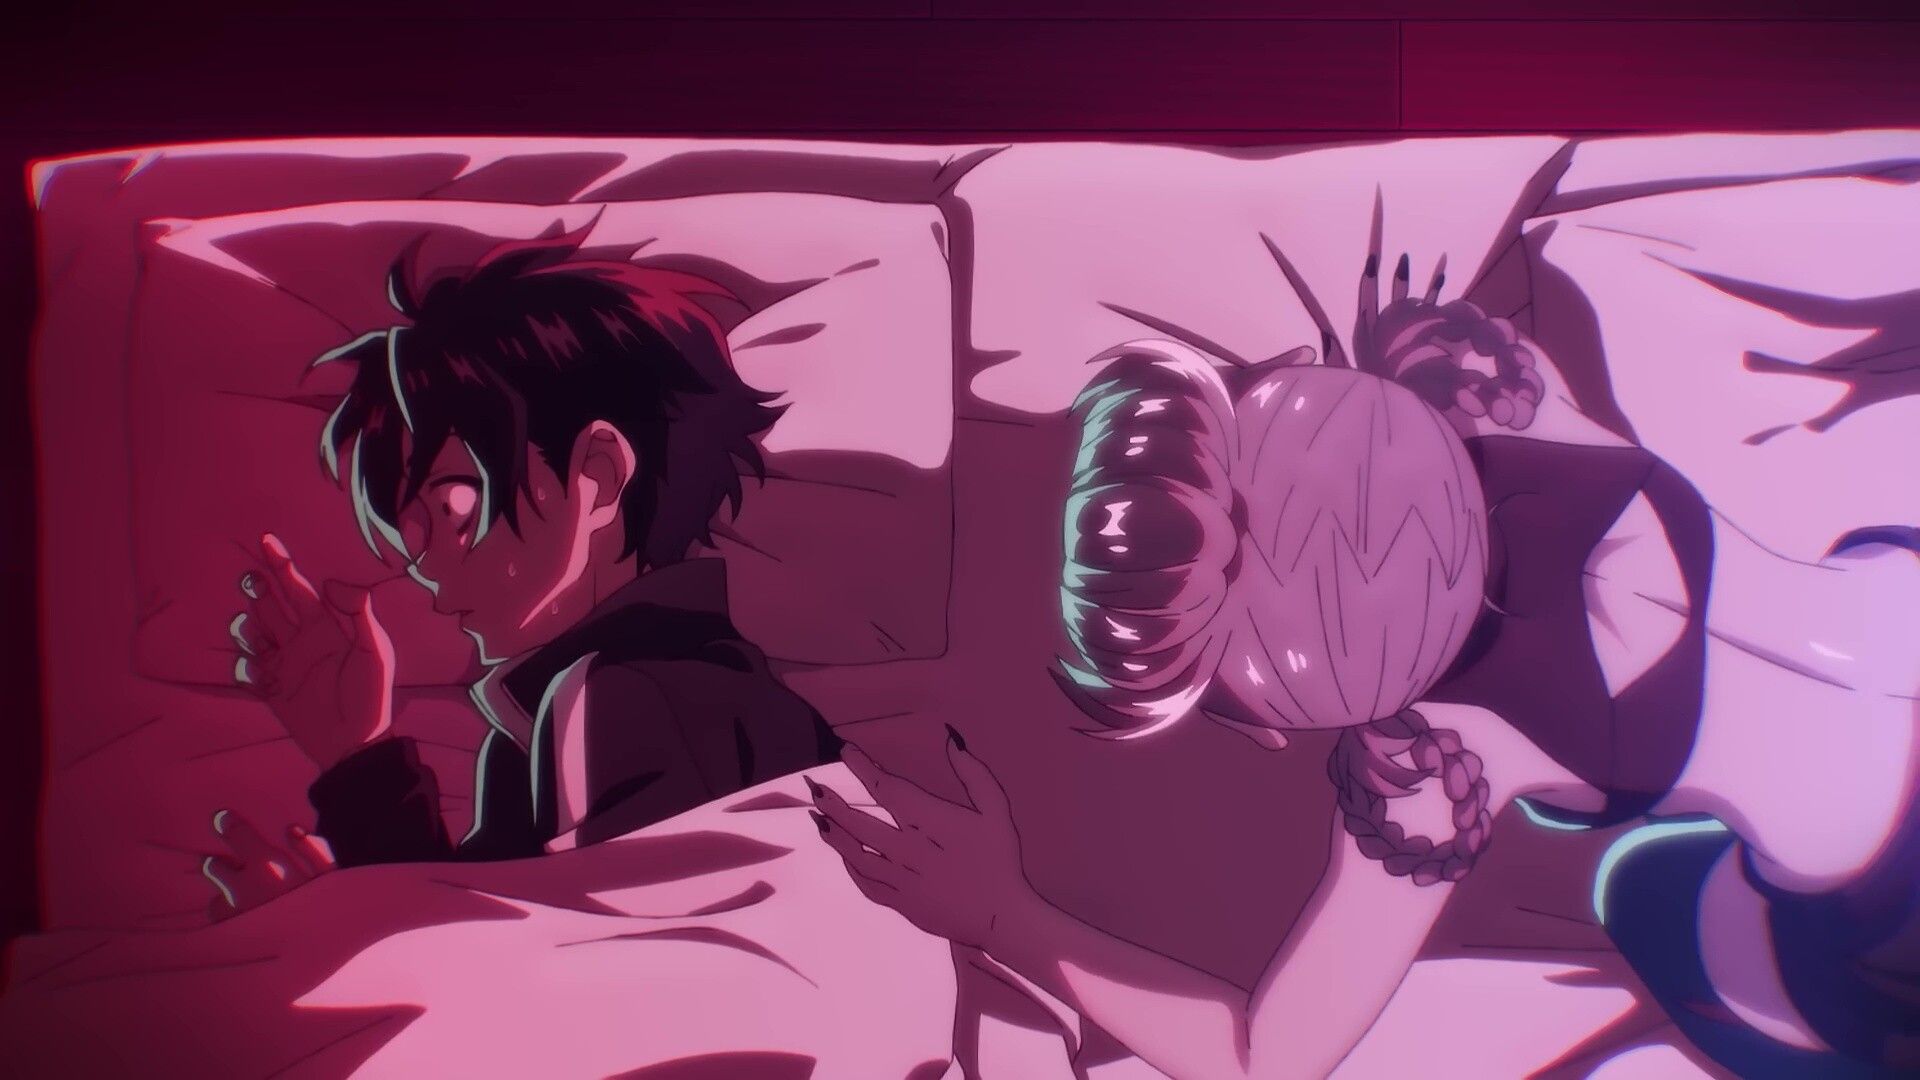 Anime "Yofukashi no Uta" A scene where you yapple with an erotic girl on a futon! Broadcasting starts in July 16